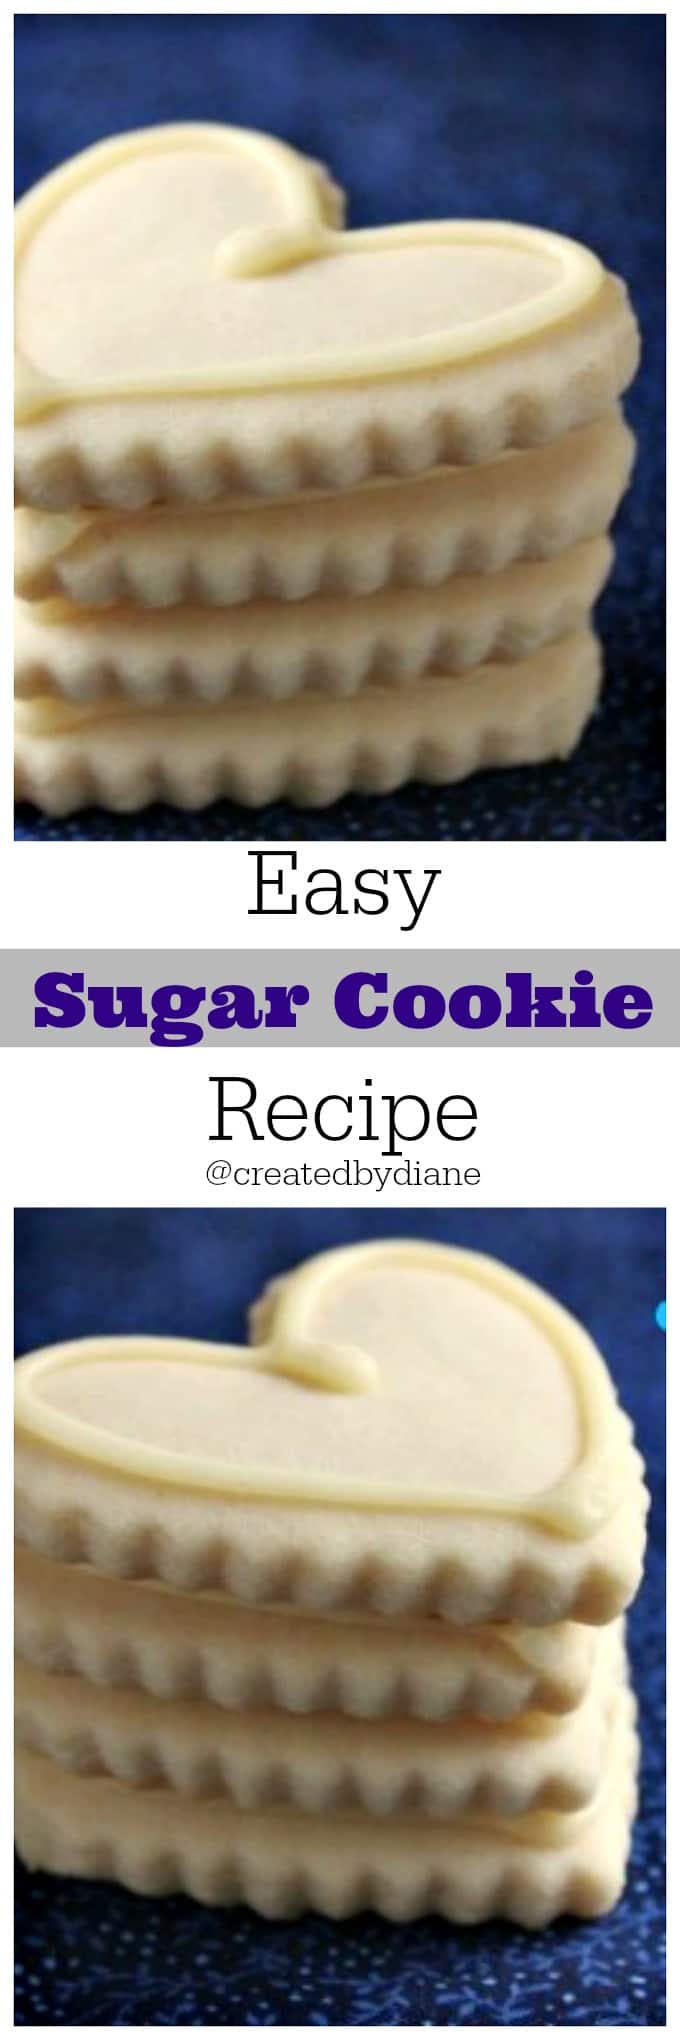 EASY Sugar Cookie Recipe from @createdbydiane